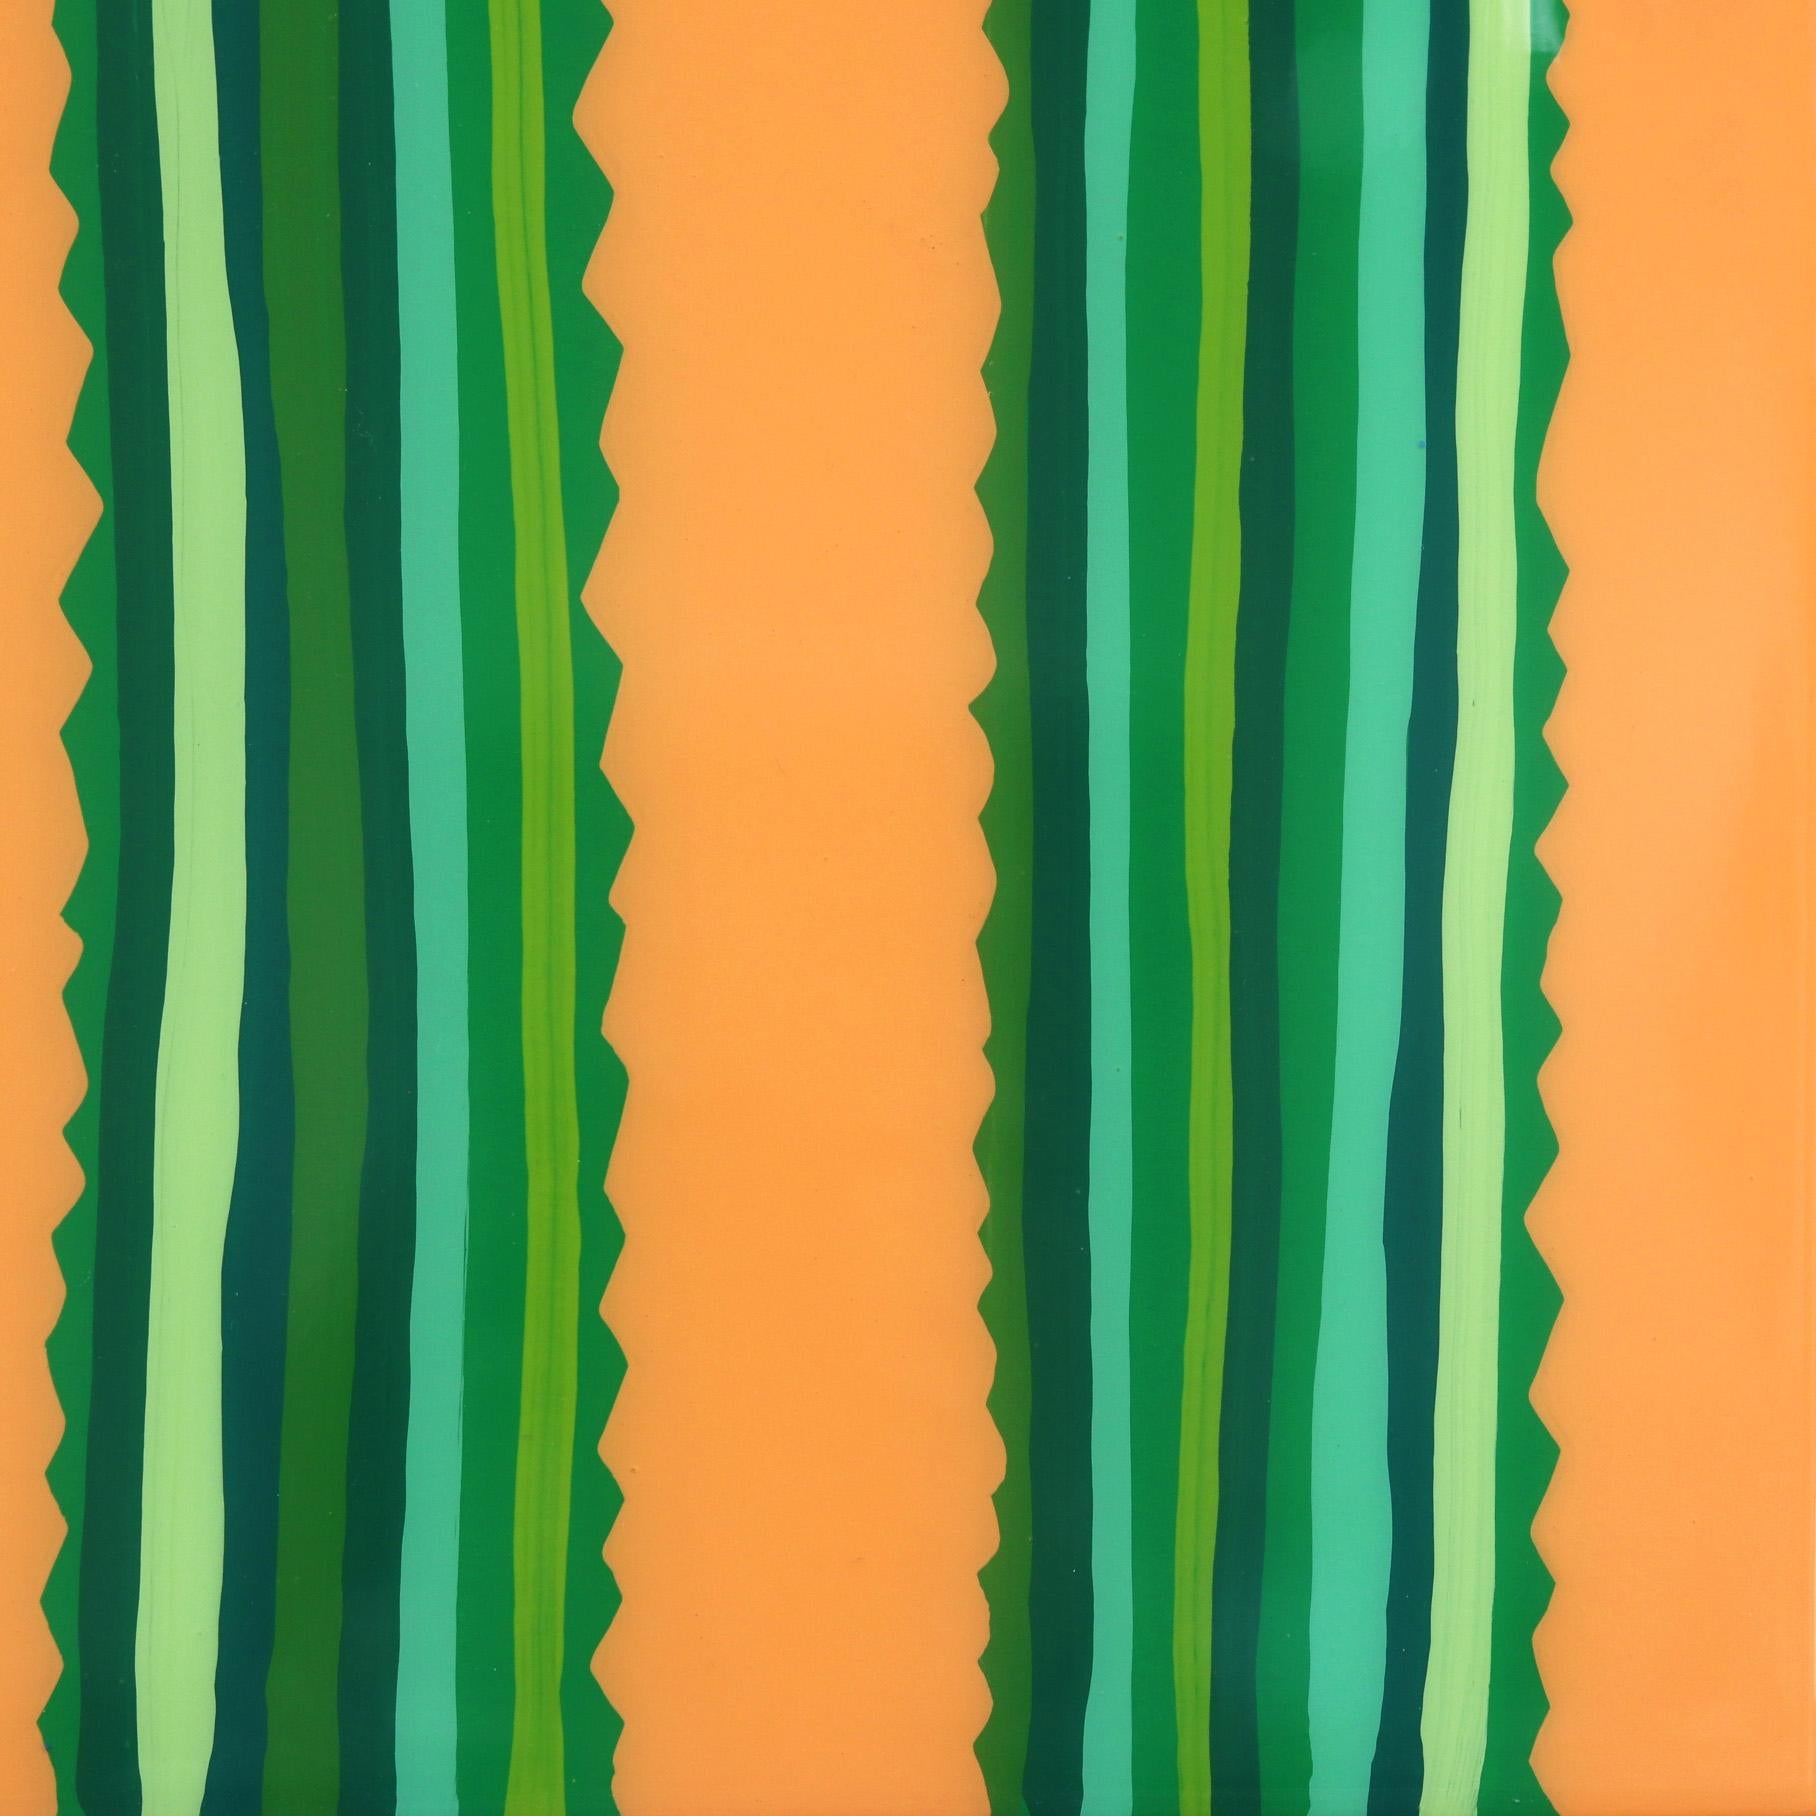 Velloso - Vibrant Orange Green Southwest Inspired Pop Art Cactus Painting For Sale 5